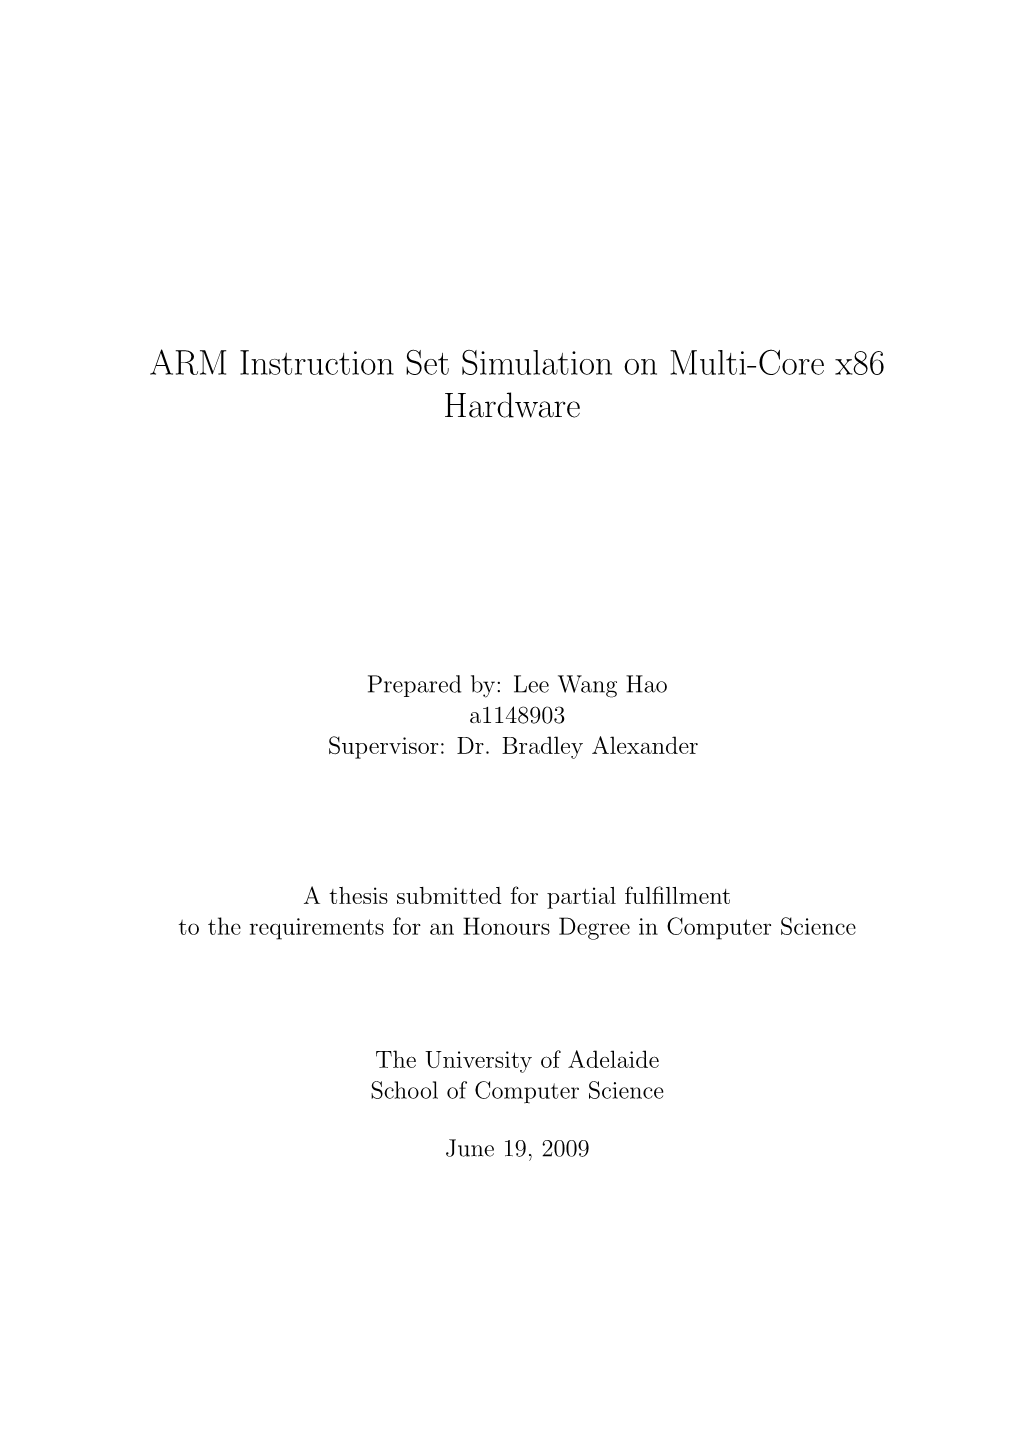 Lee Wang Hao, ARM Instruction Set Simulation on Multi-Core X86